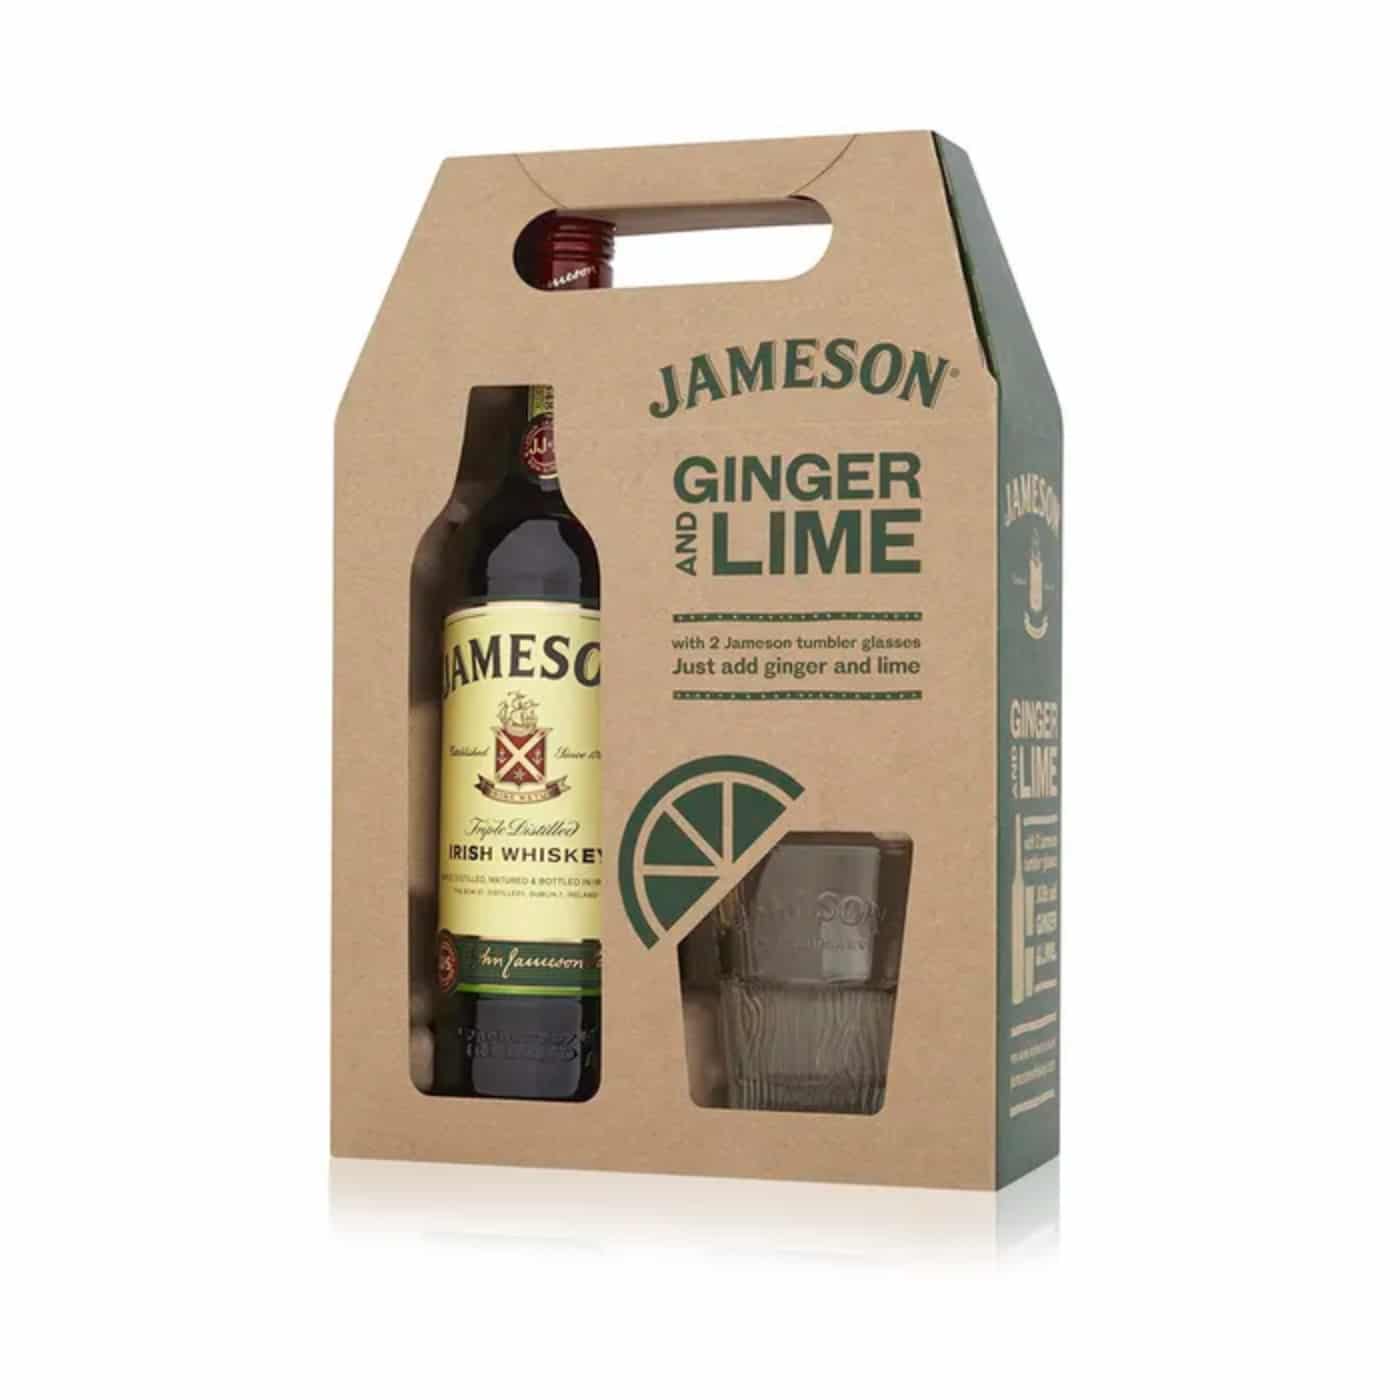 https://www.gpaglobal.net/wp-content/uploads/2021/12/jameson_ginger_lime_set_wines_spirits_packaging_GPA-sq-1.jpg